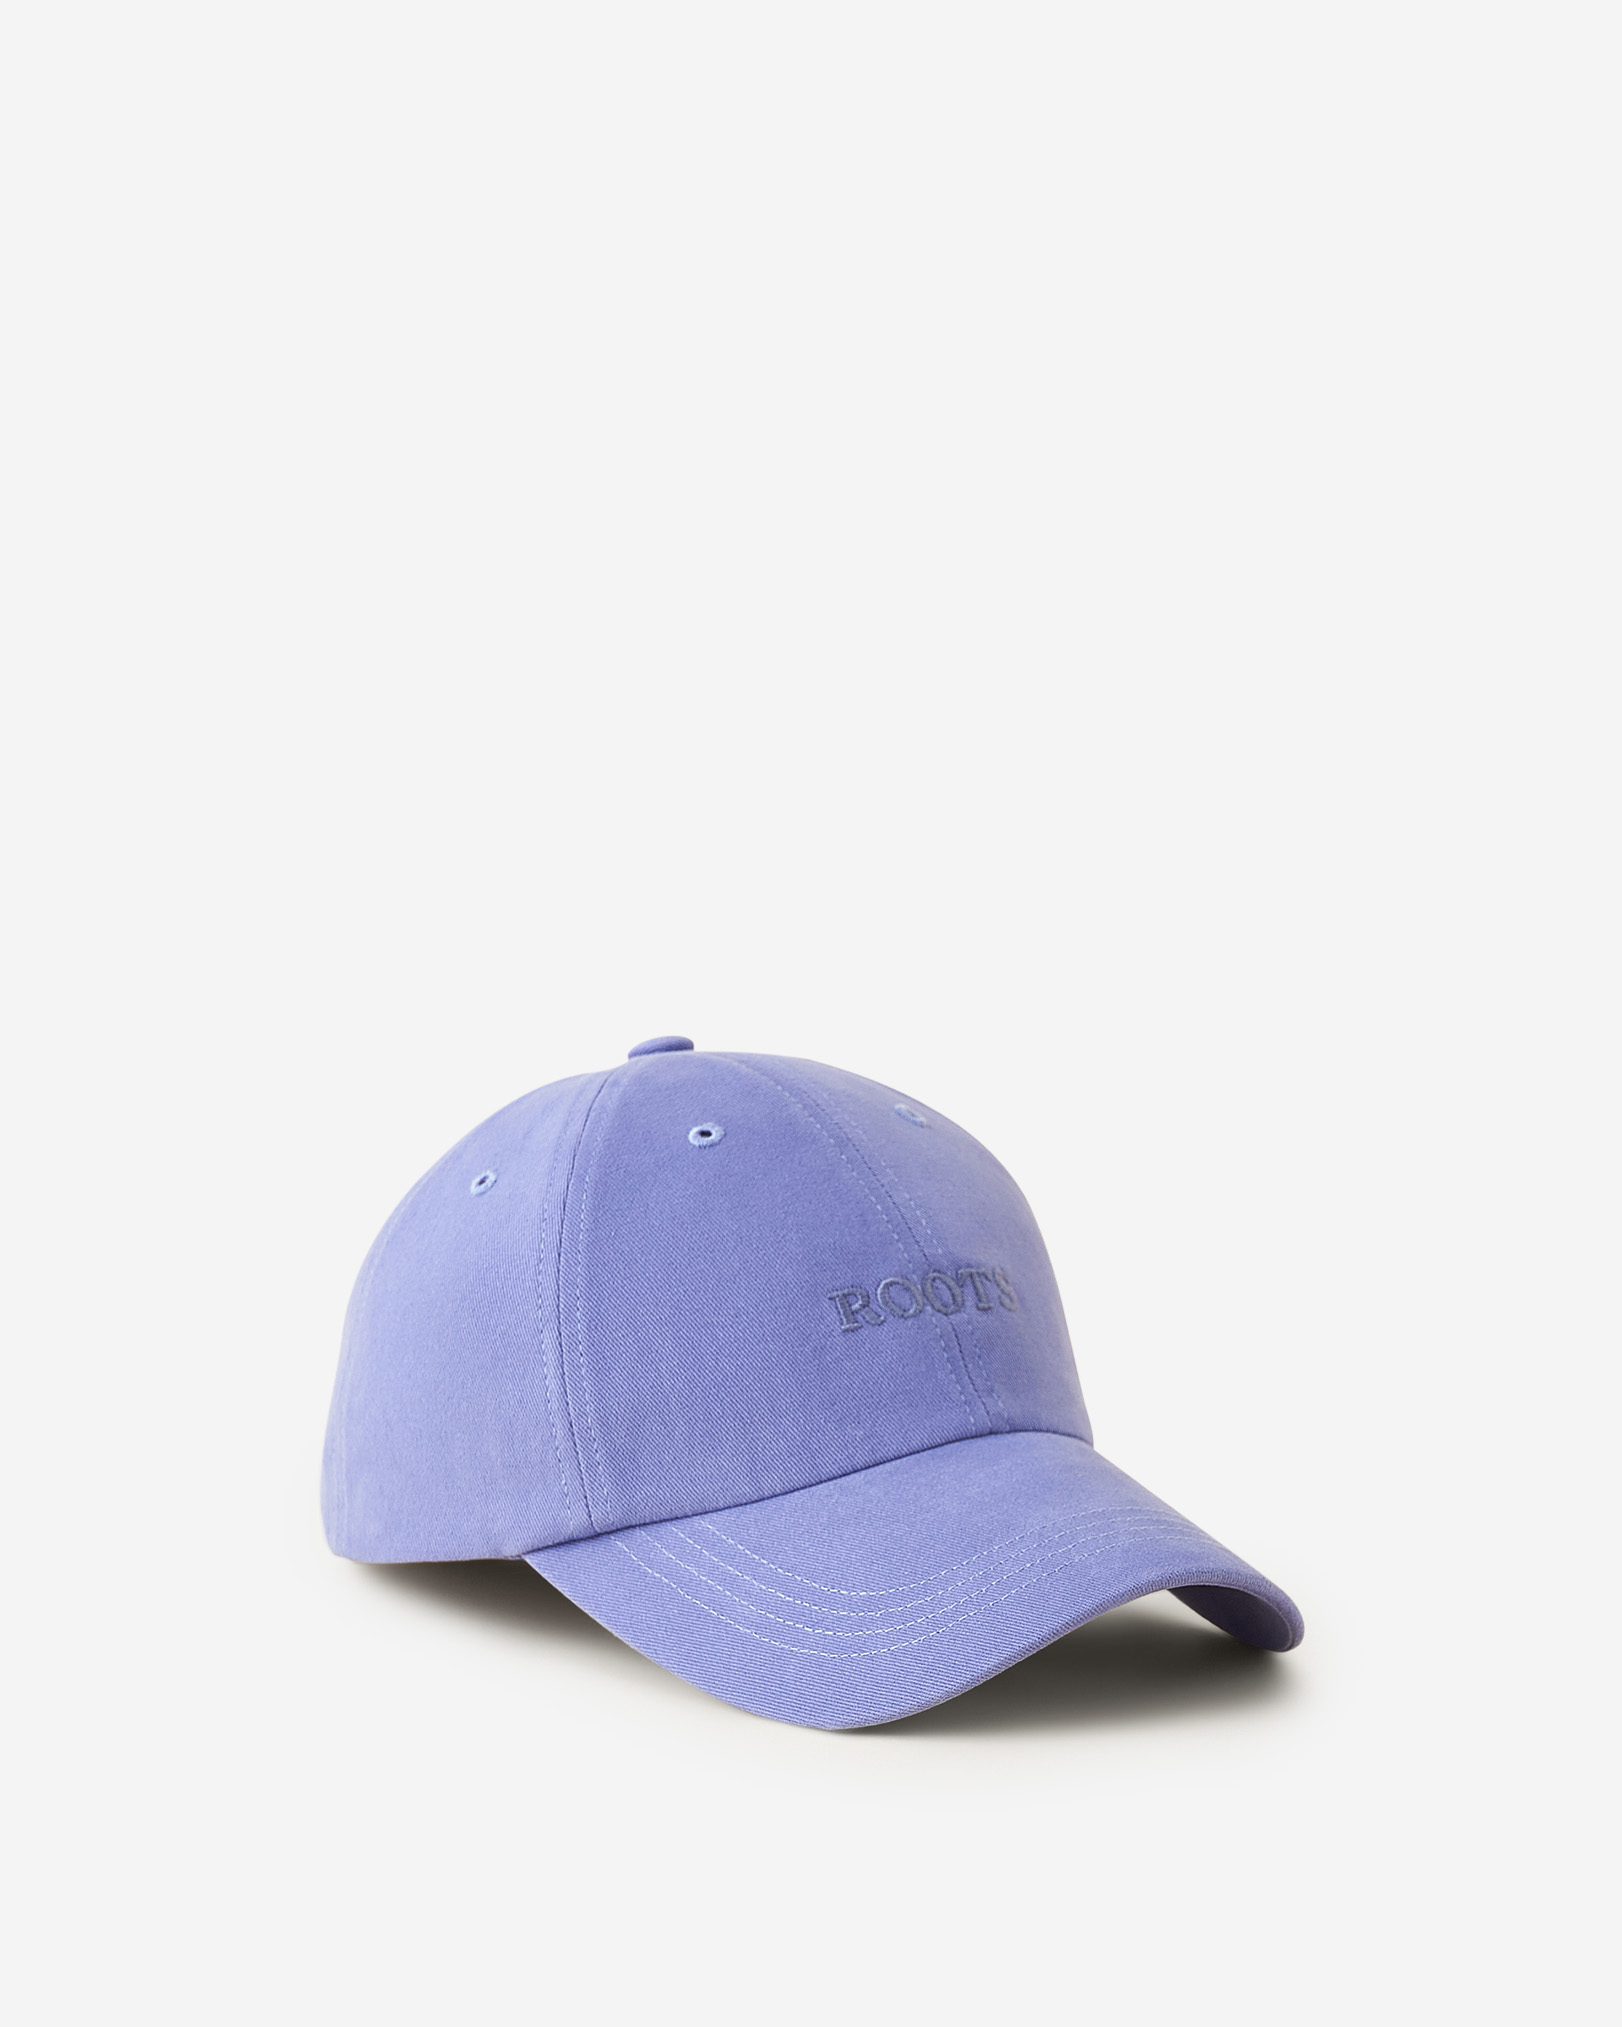 Roots Baseball Cap Hat in Periwinkle Purple